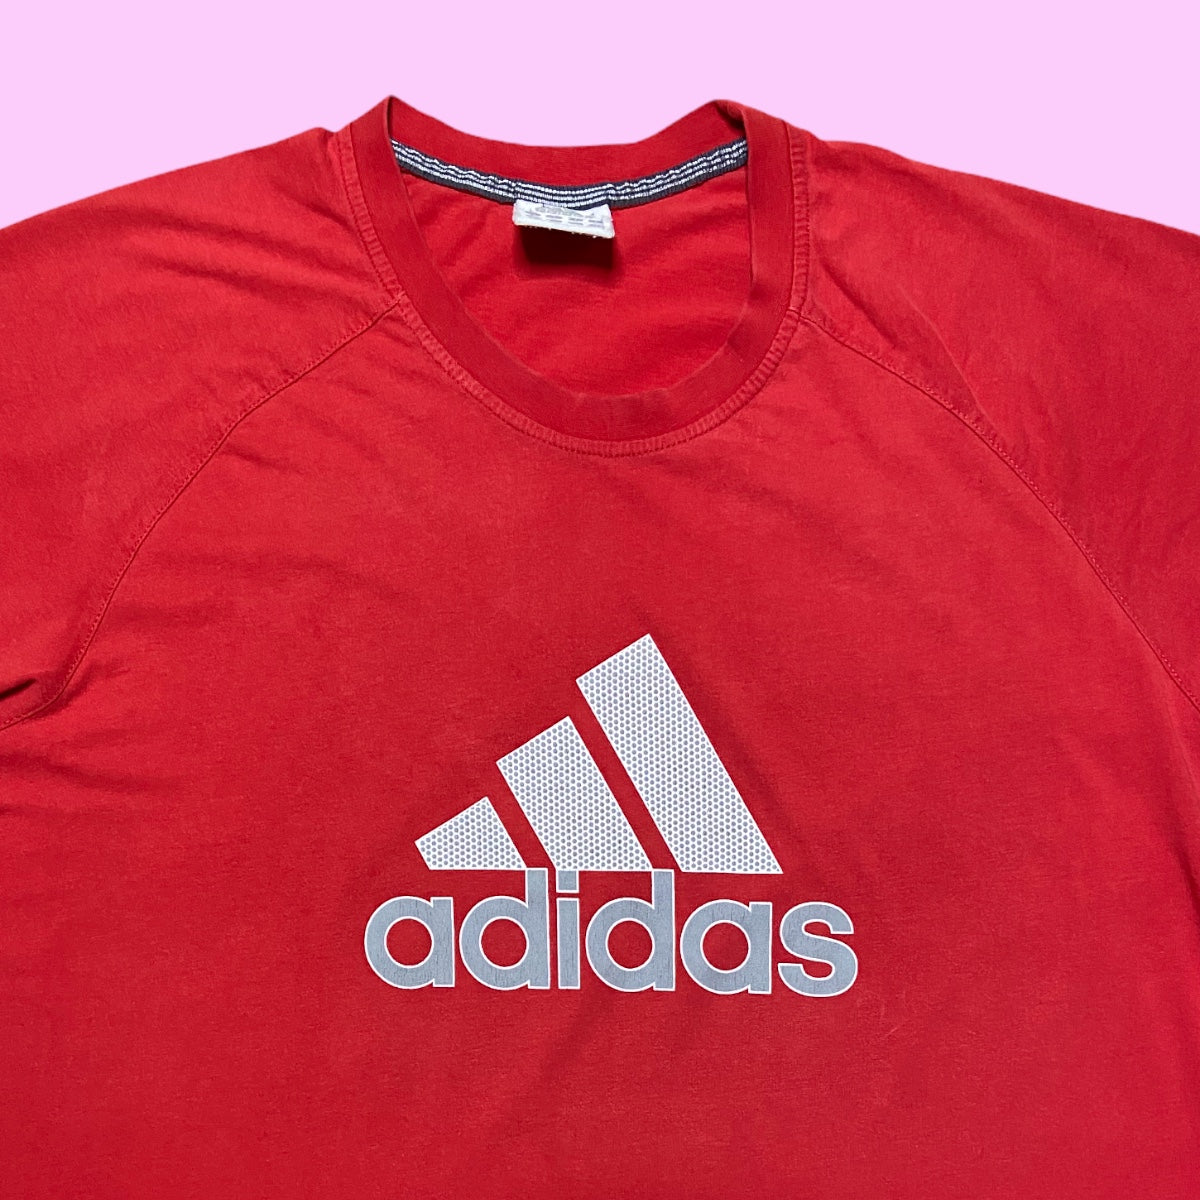 Vintage Adidas T-Shirt - XL